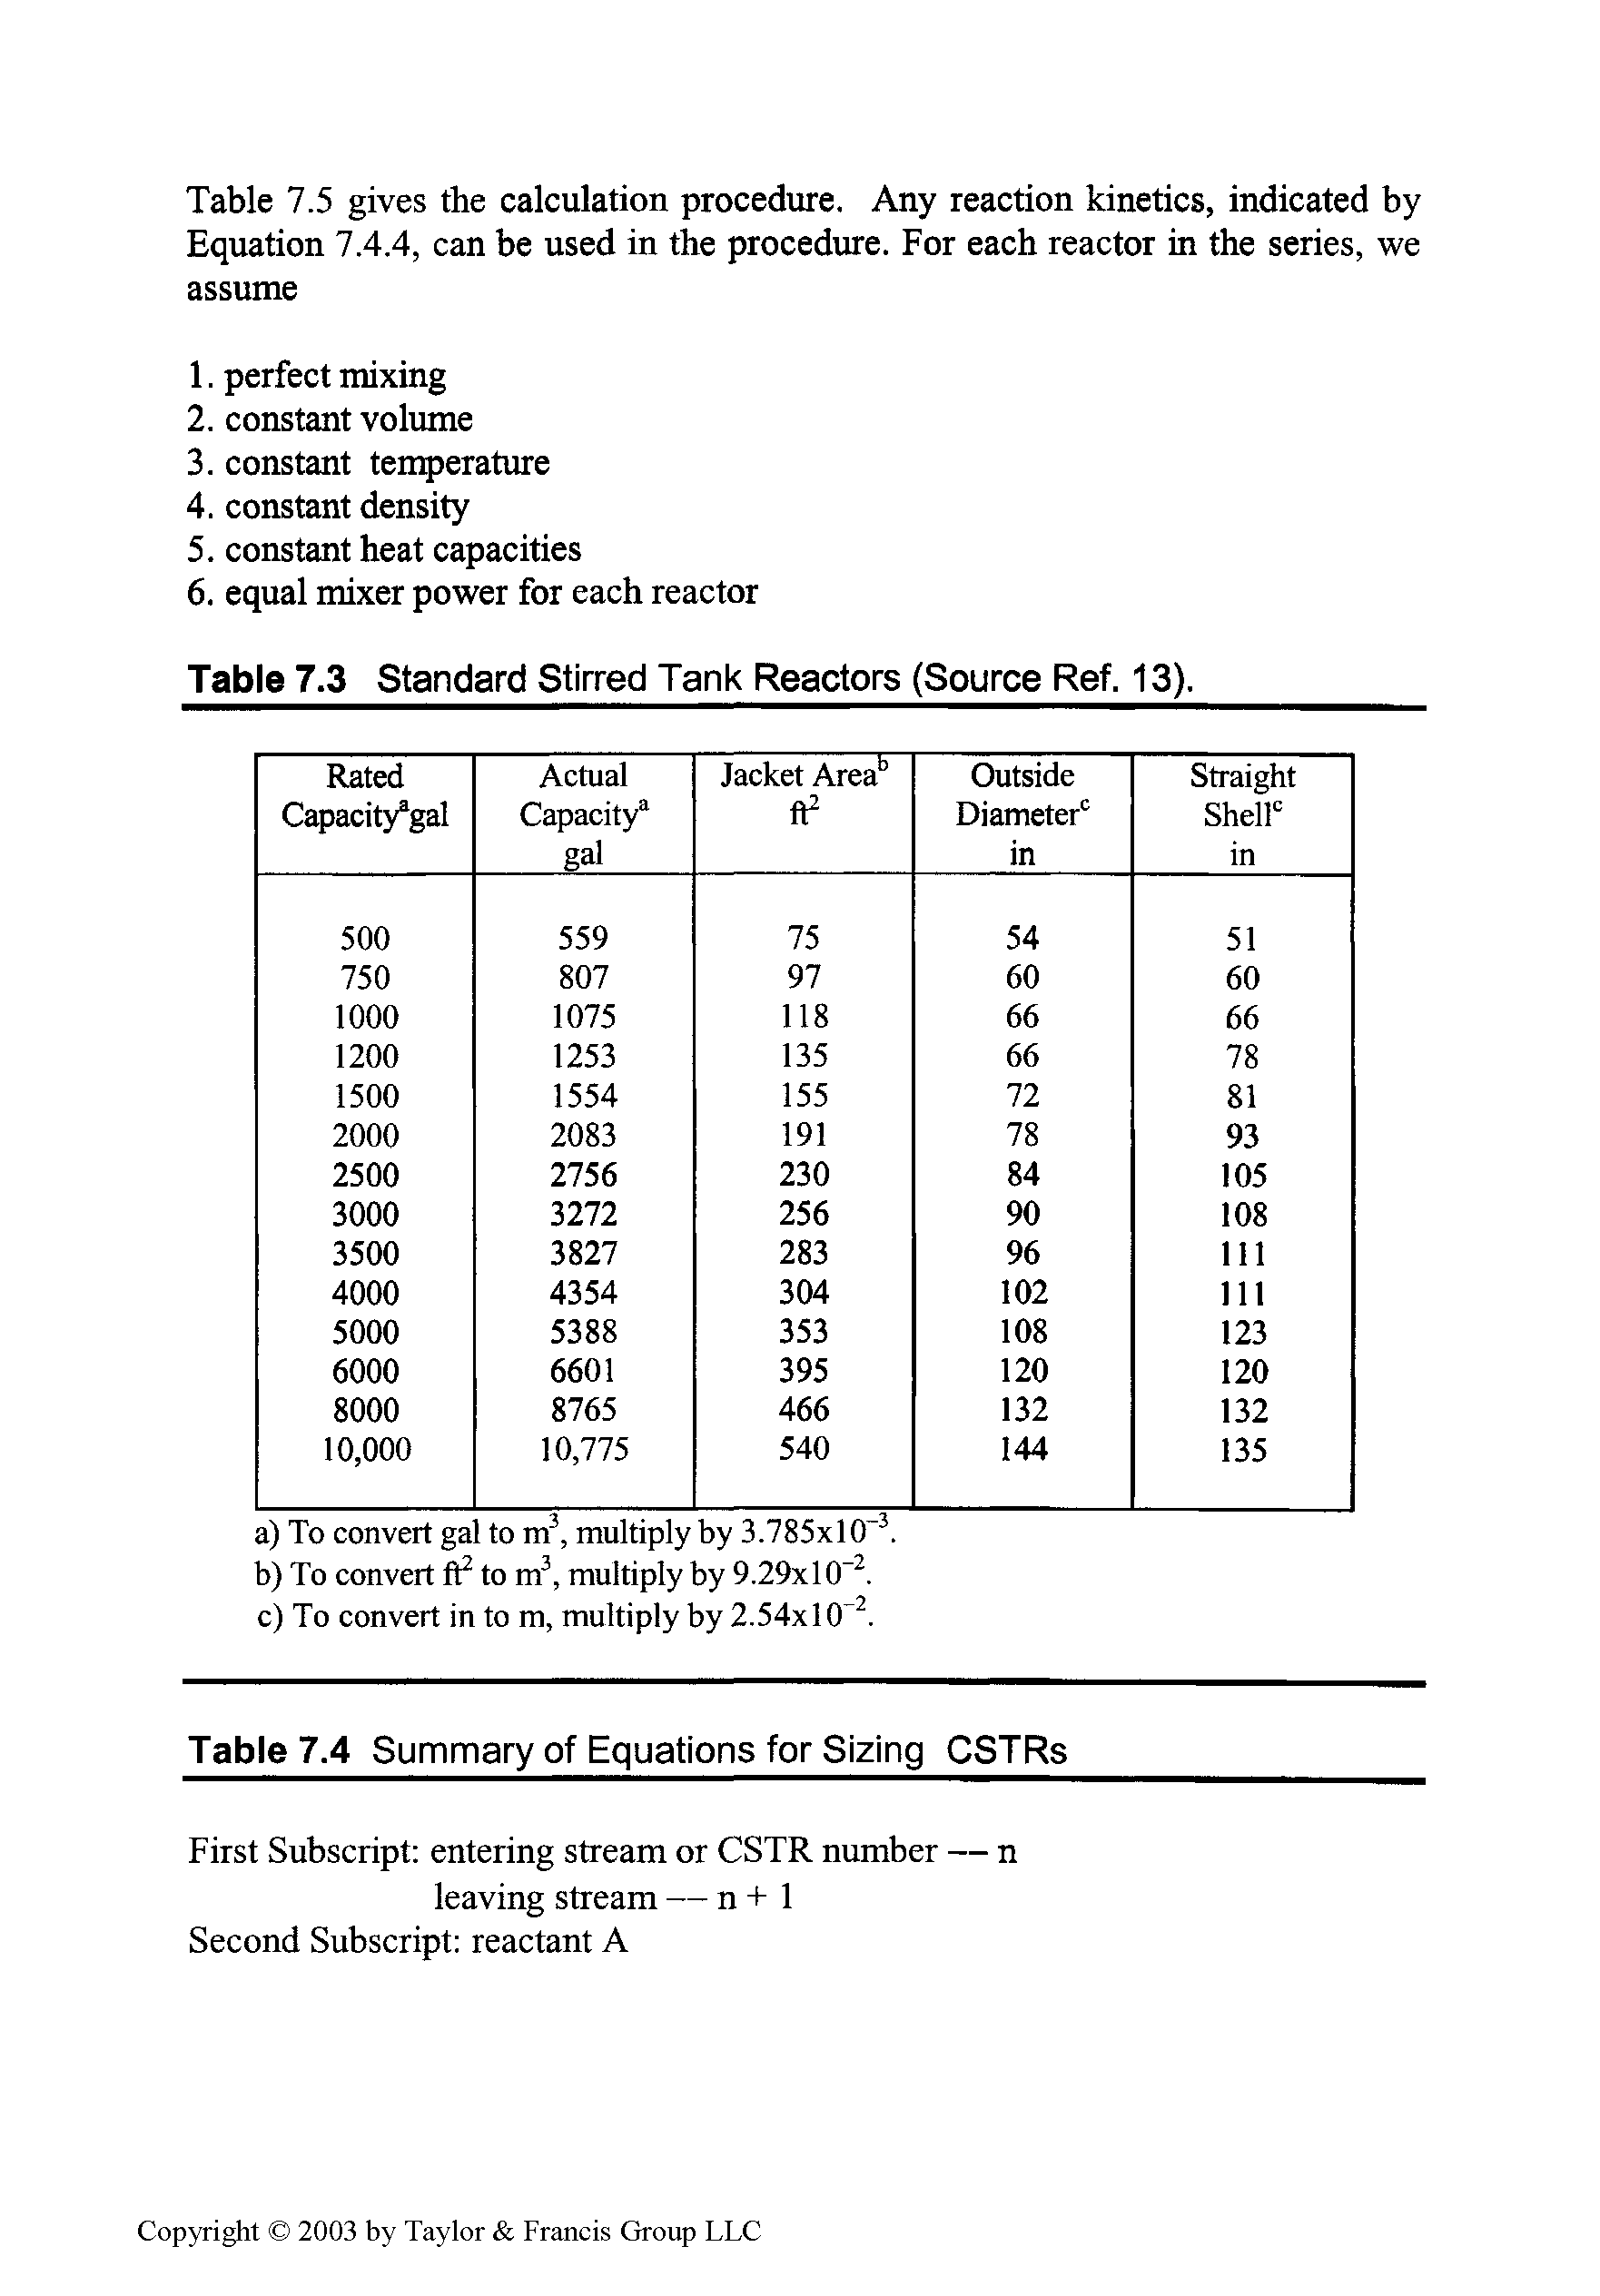 Table 7.3 Standard Stirred Tank Reactors (Source Ref. 13).